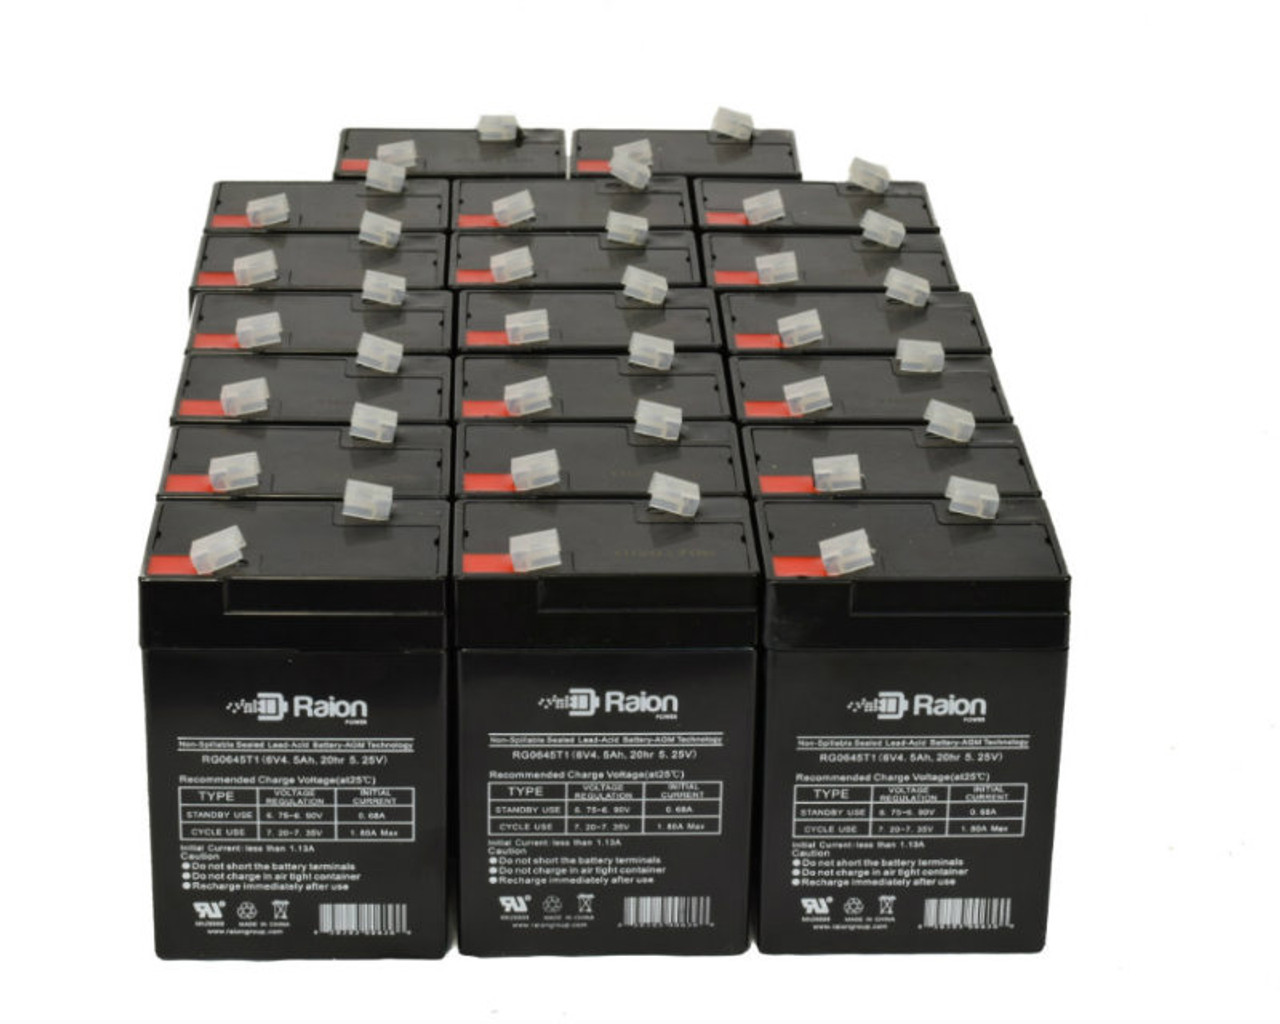 Raion Power 6V 4.5Ah Replacement Emergency Light Battery for AtLite 24-1002 - 20 Pack